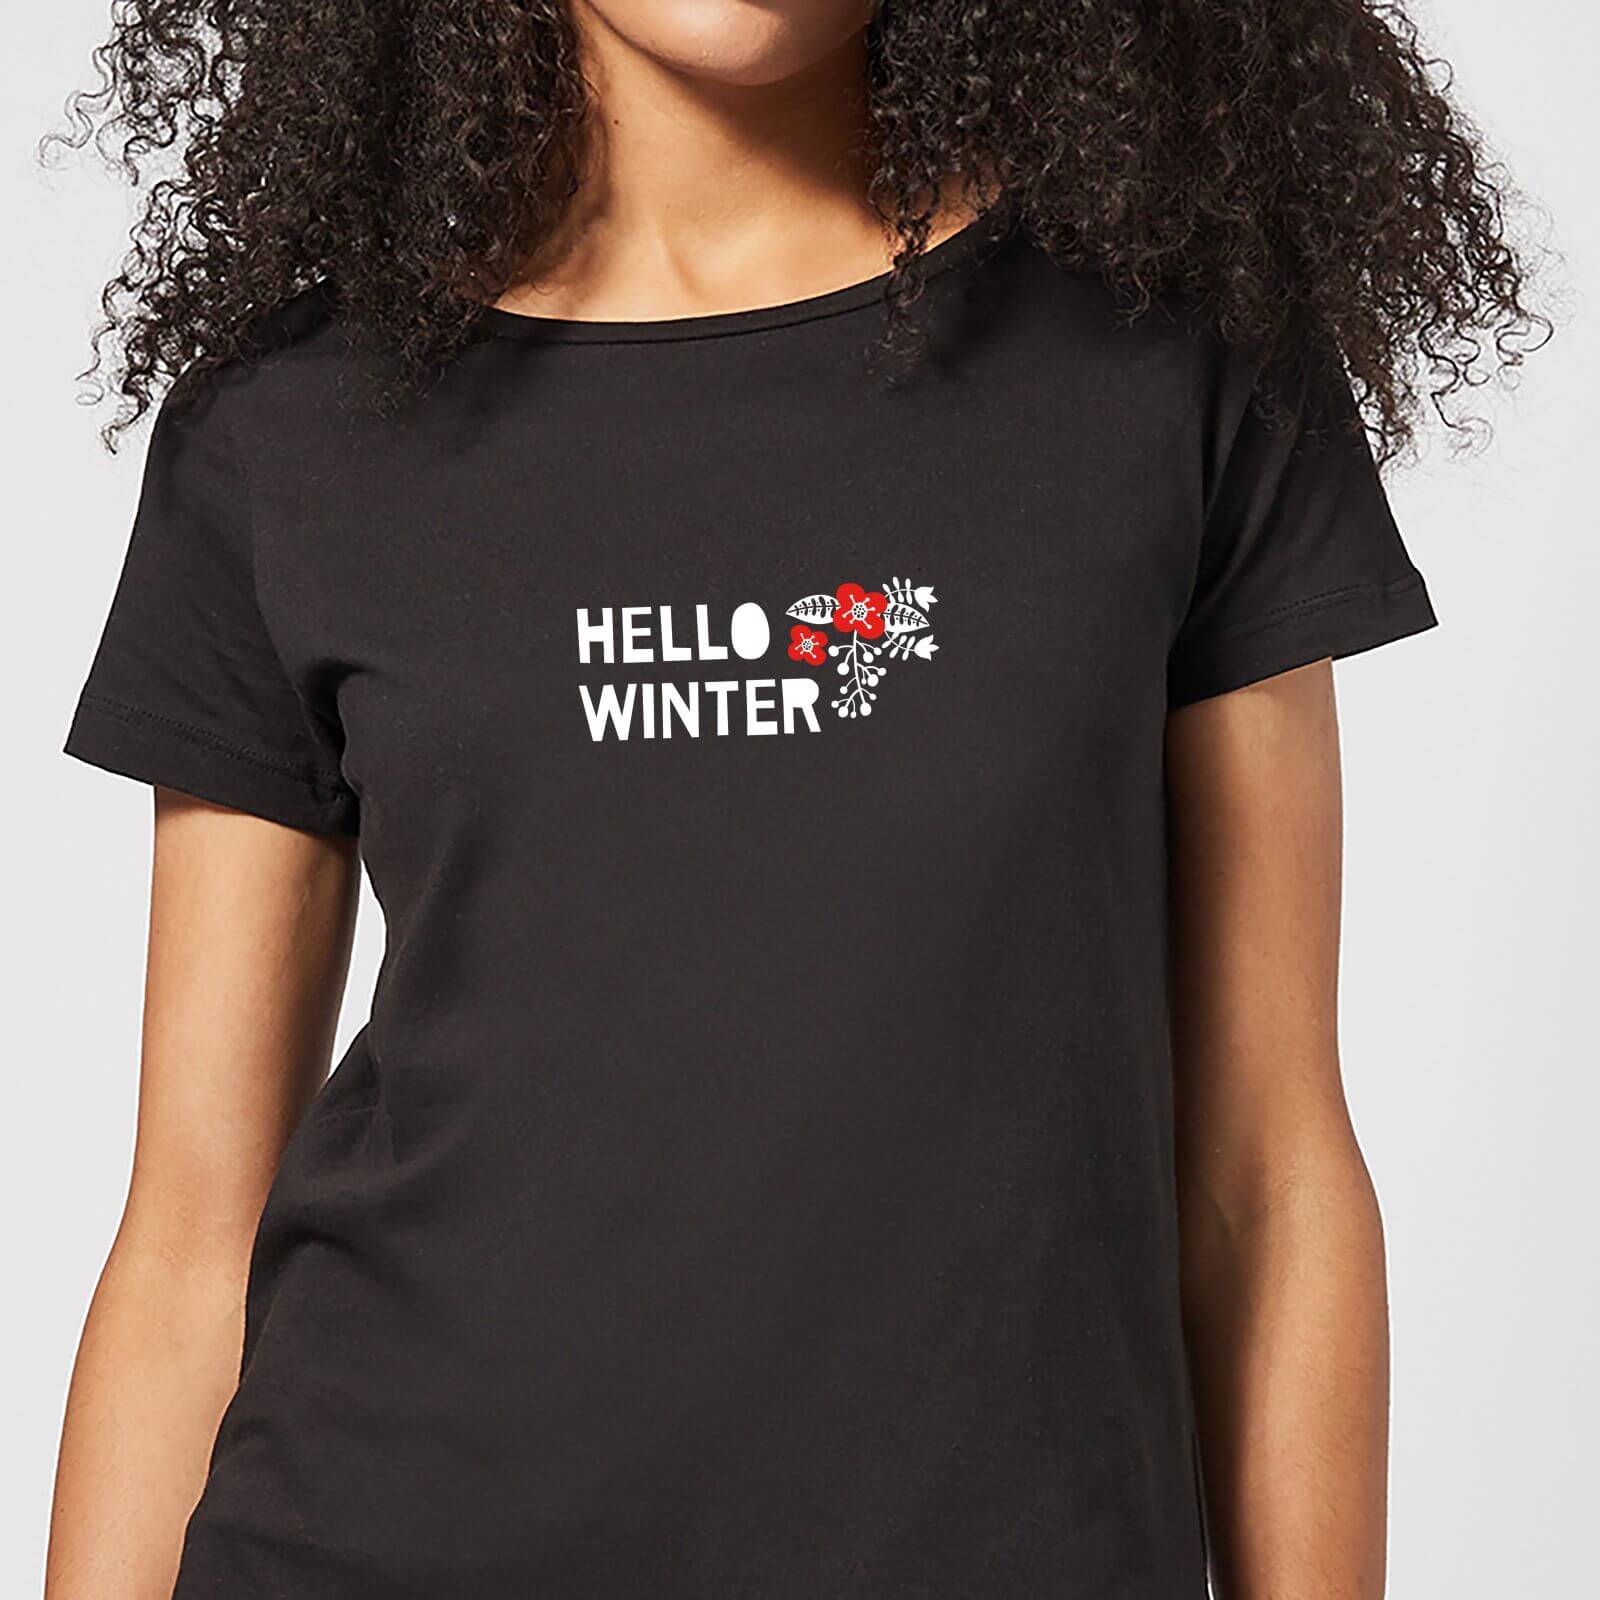 Hello Winter Women's T-Shirt - Black - 3XL - Black